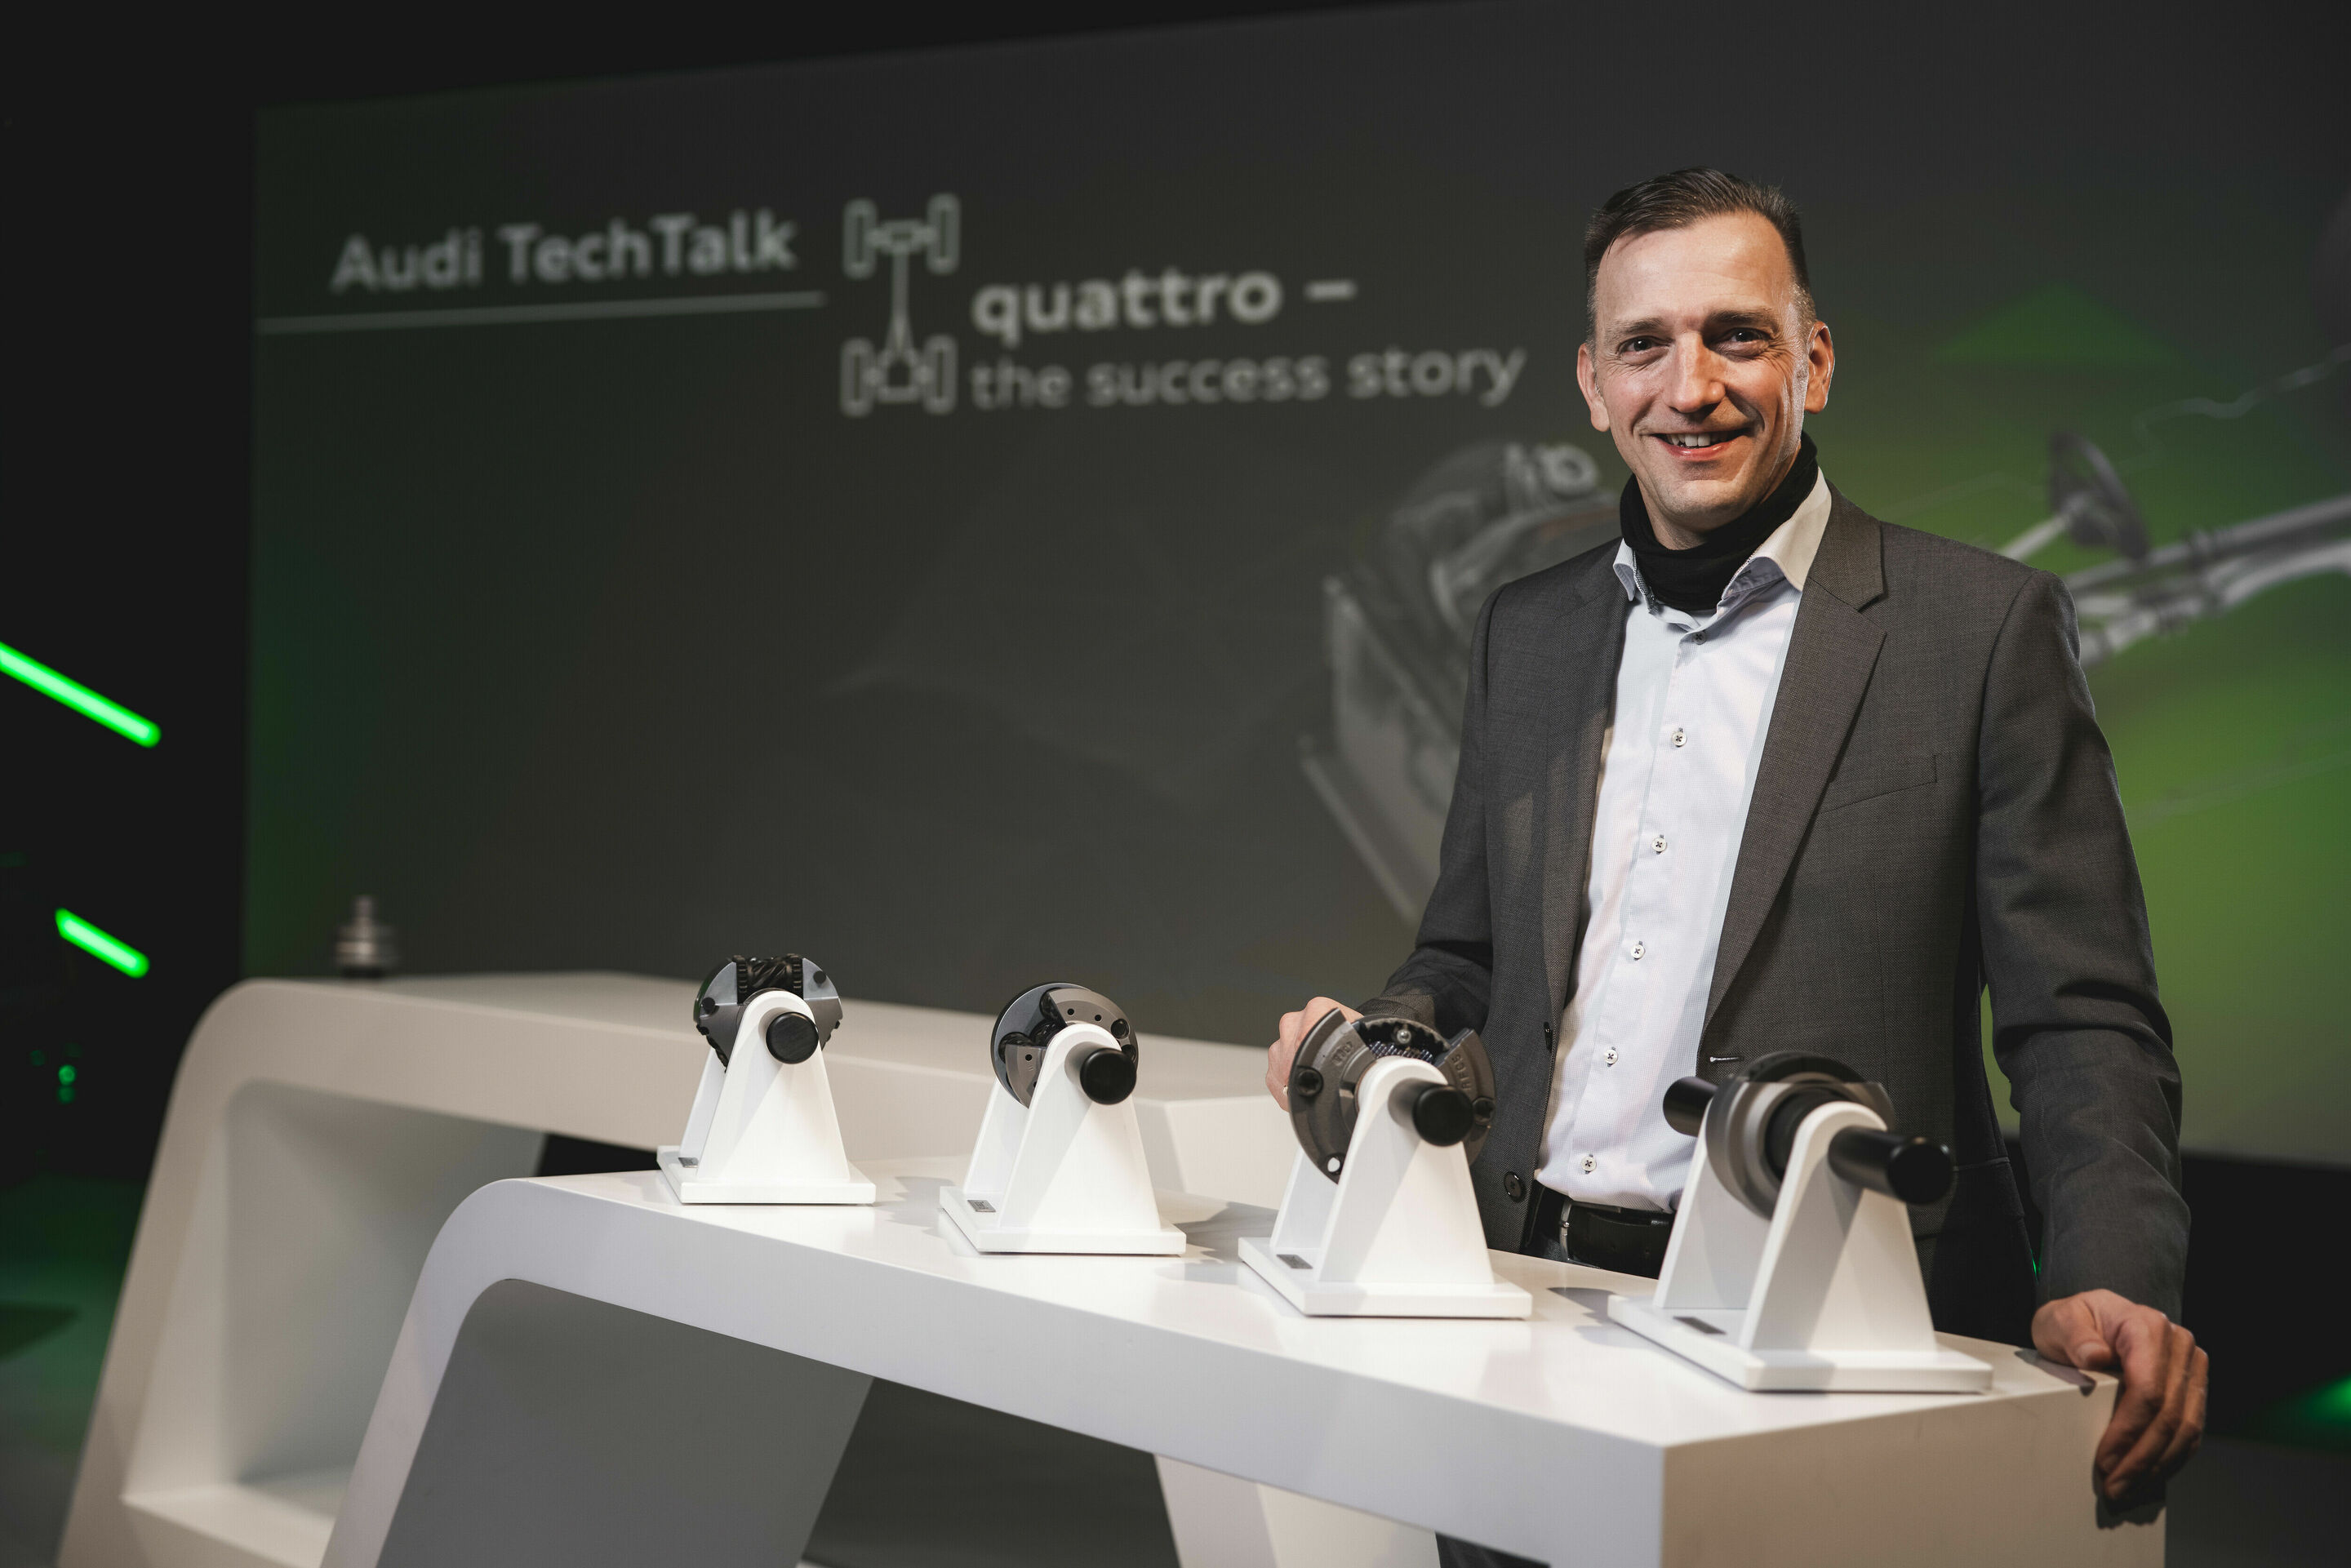 TechTalk quattro – the winning technology